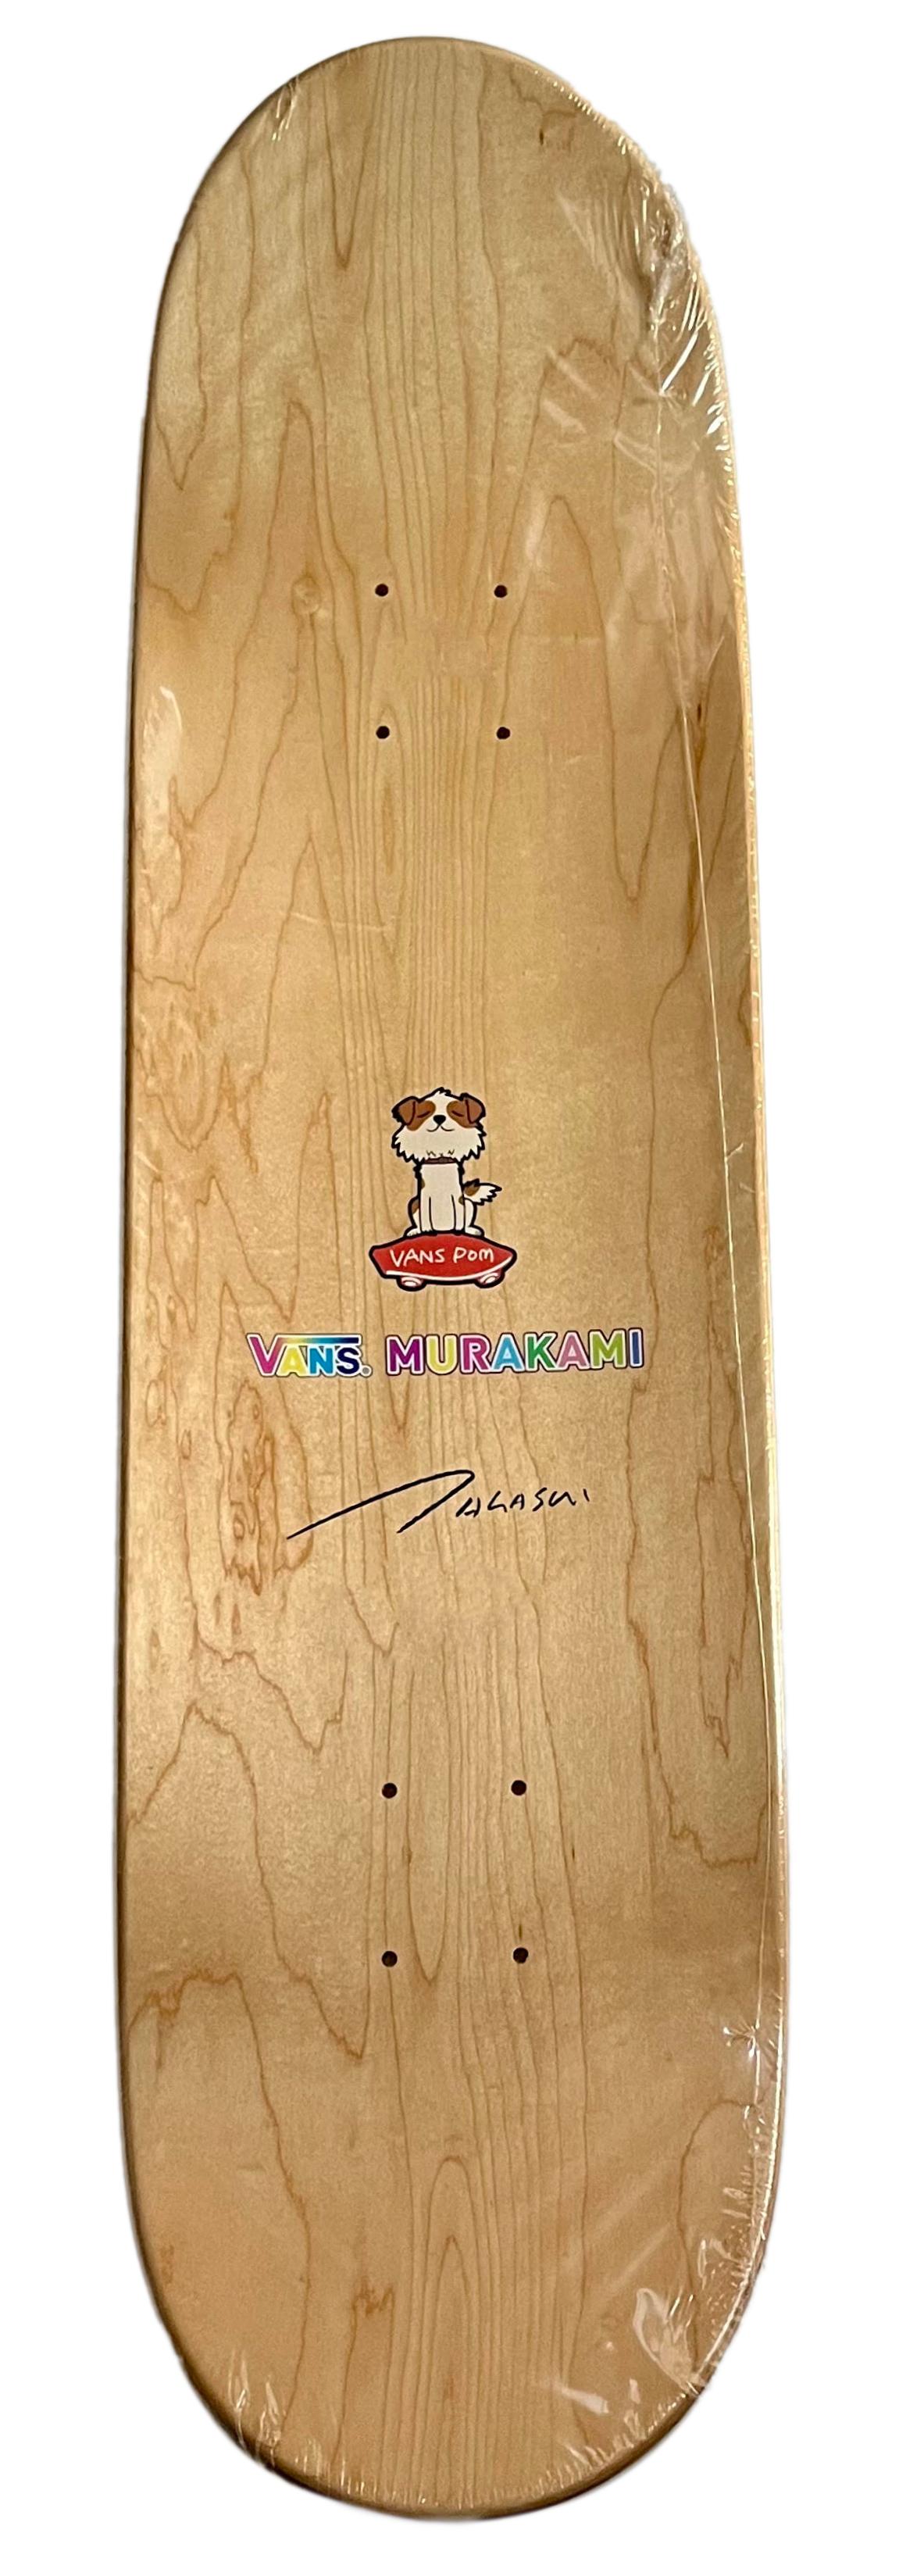 Takashi Murakami Skateboard Decks: Set of 2  works: 2015-2017:

Takashi Murakami Skulls Skateboard Deck 2015: this highly collectible limited edition Murakami skateboard was published in 2015 as part of a collaboration between Takashi Murakami &